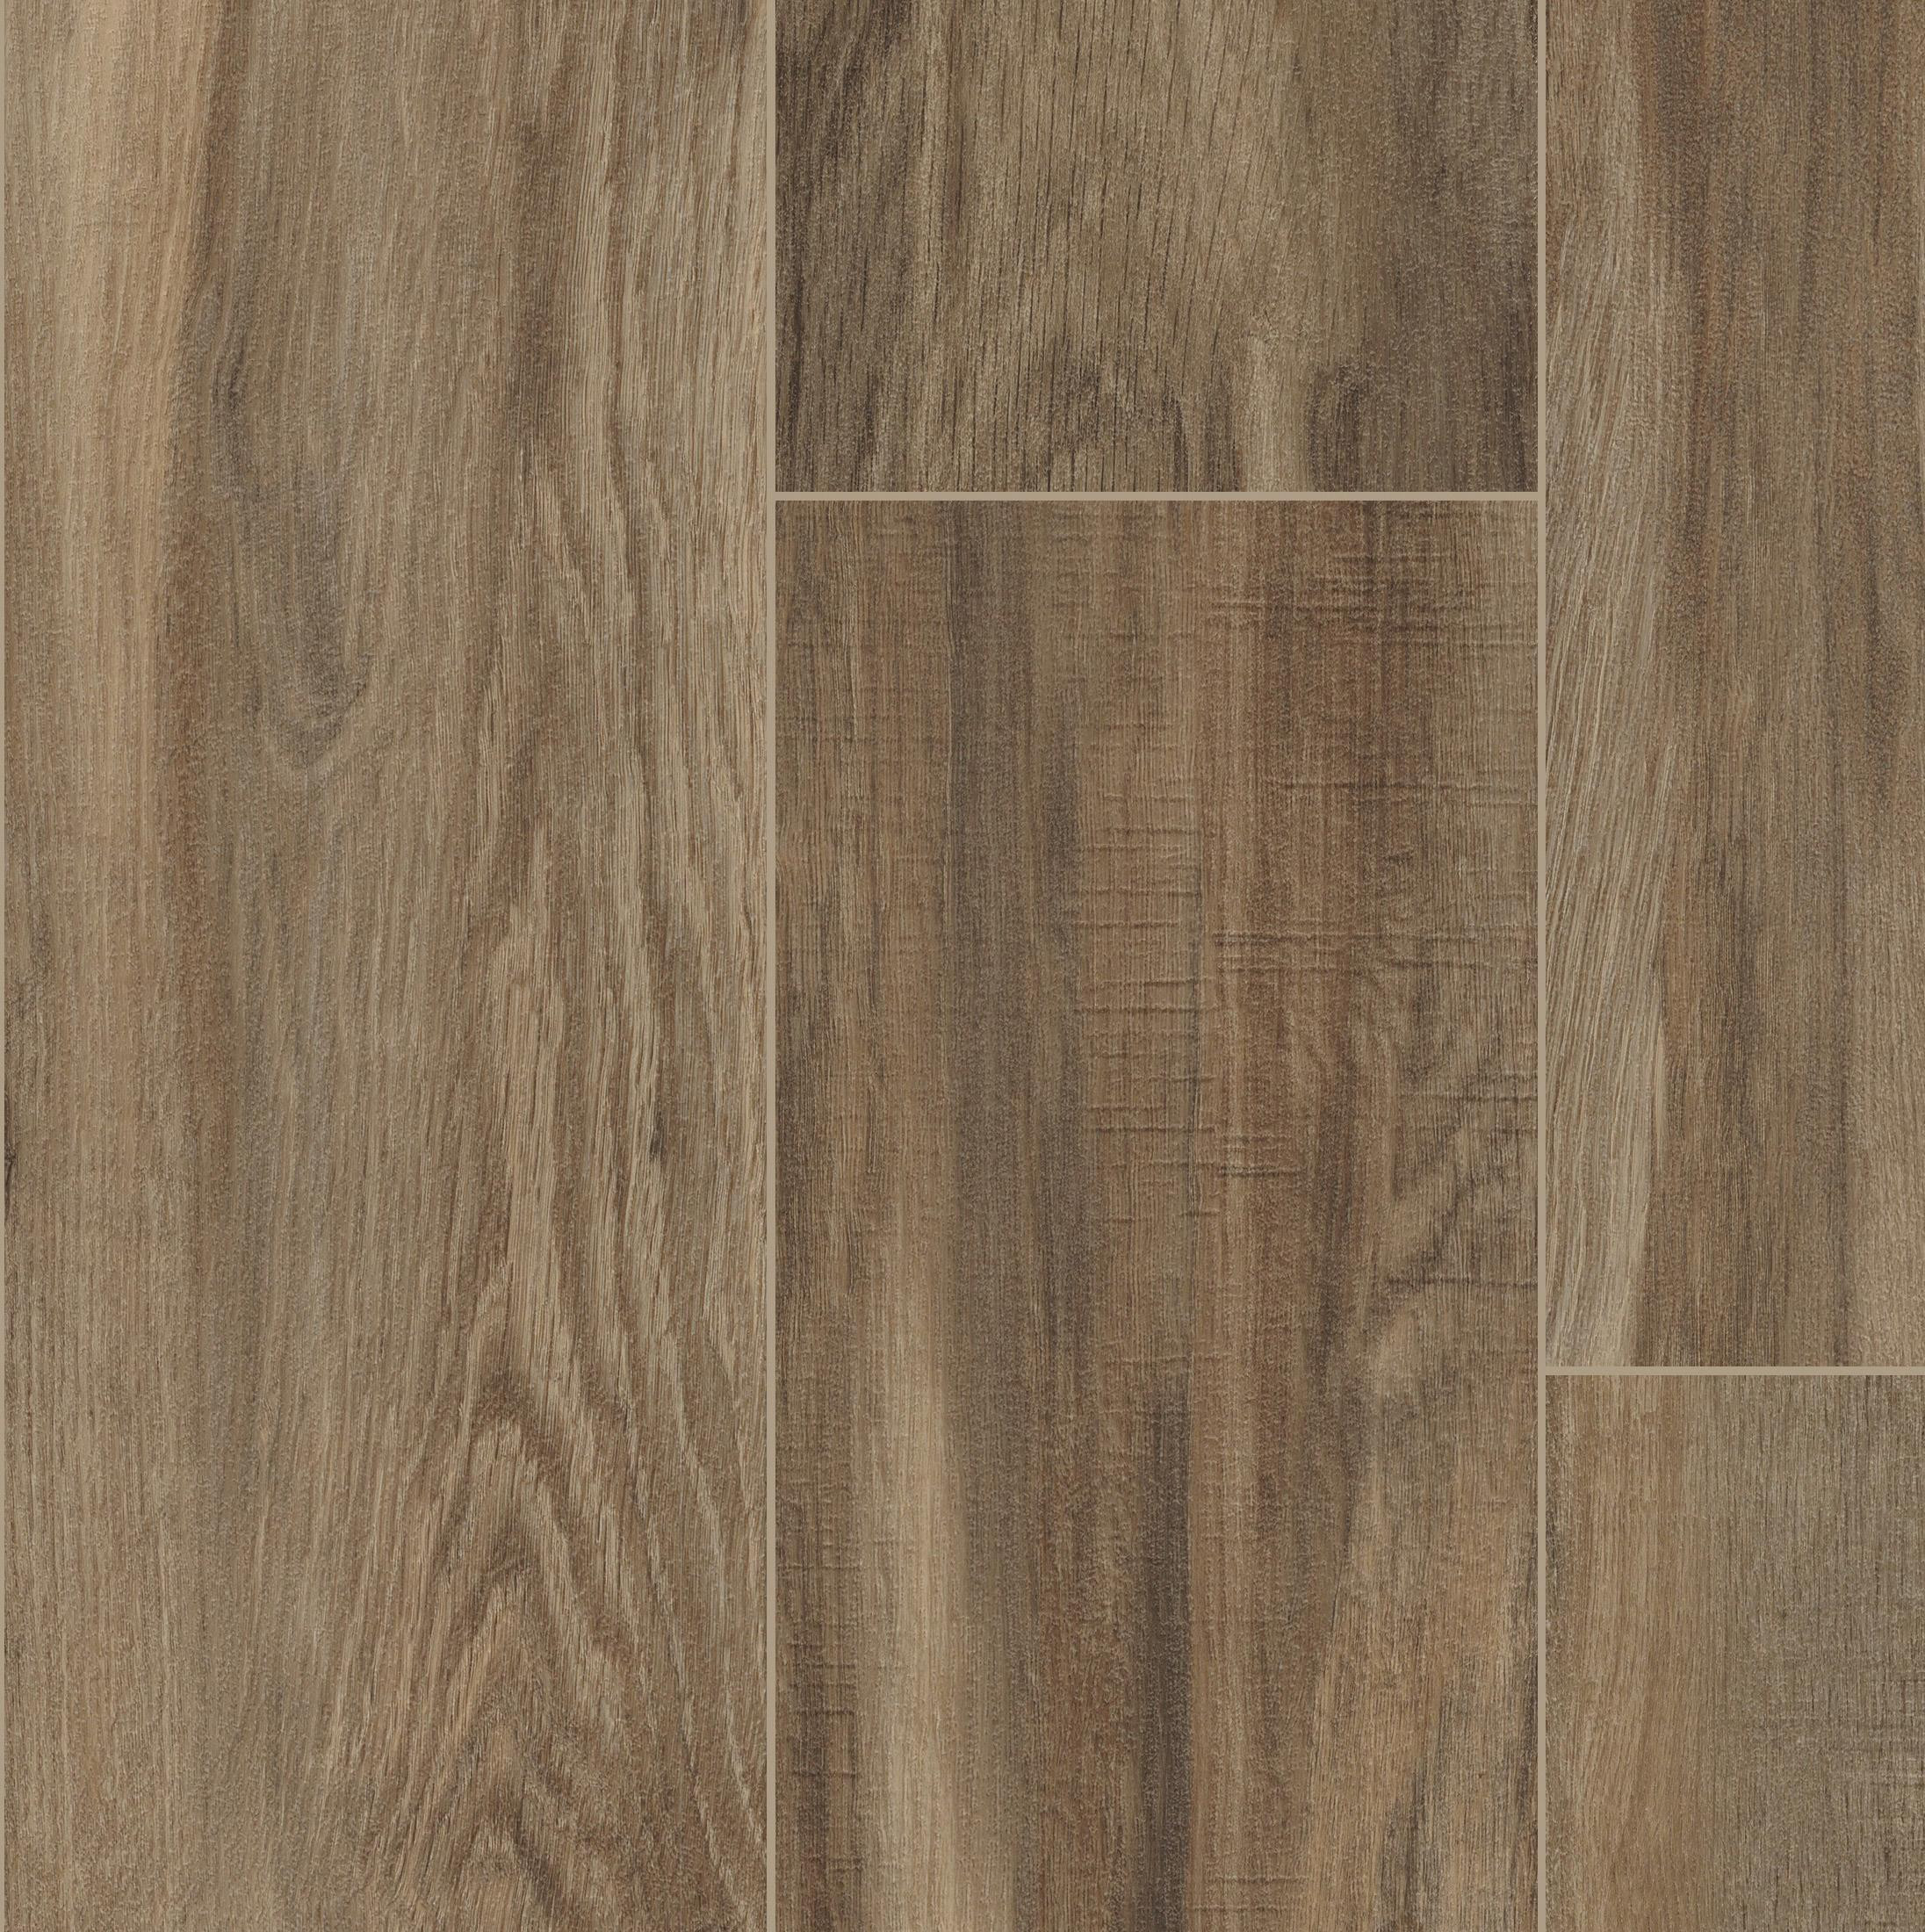 vinyl plank flooring over hardwood of mohawk amber 9 wide glue down luxury vinyl plank flooring for 330 8 78 x 70 55 approved